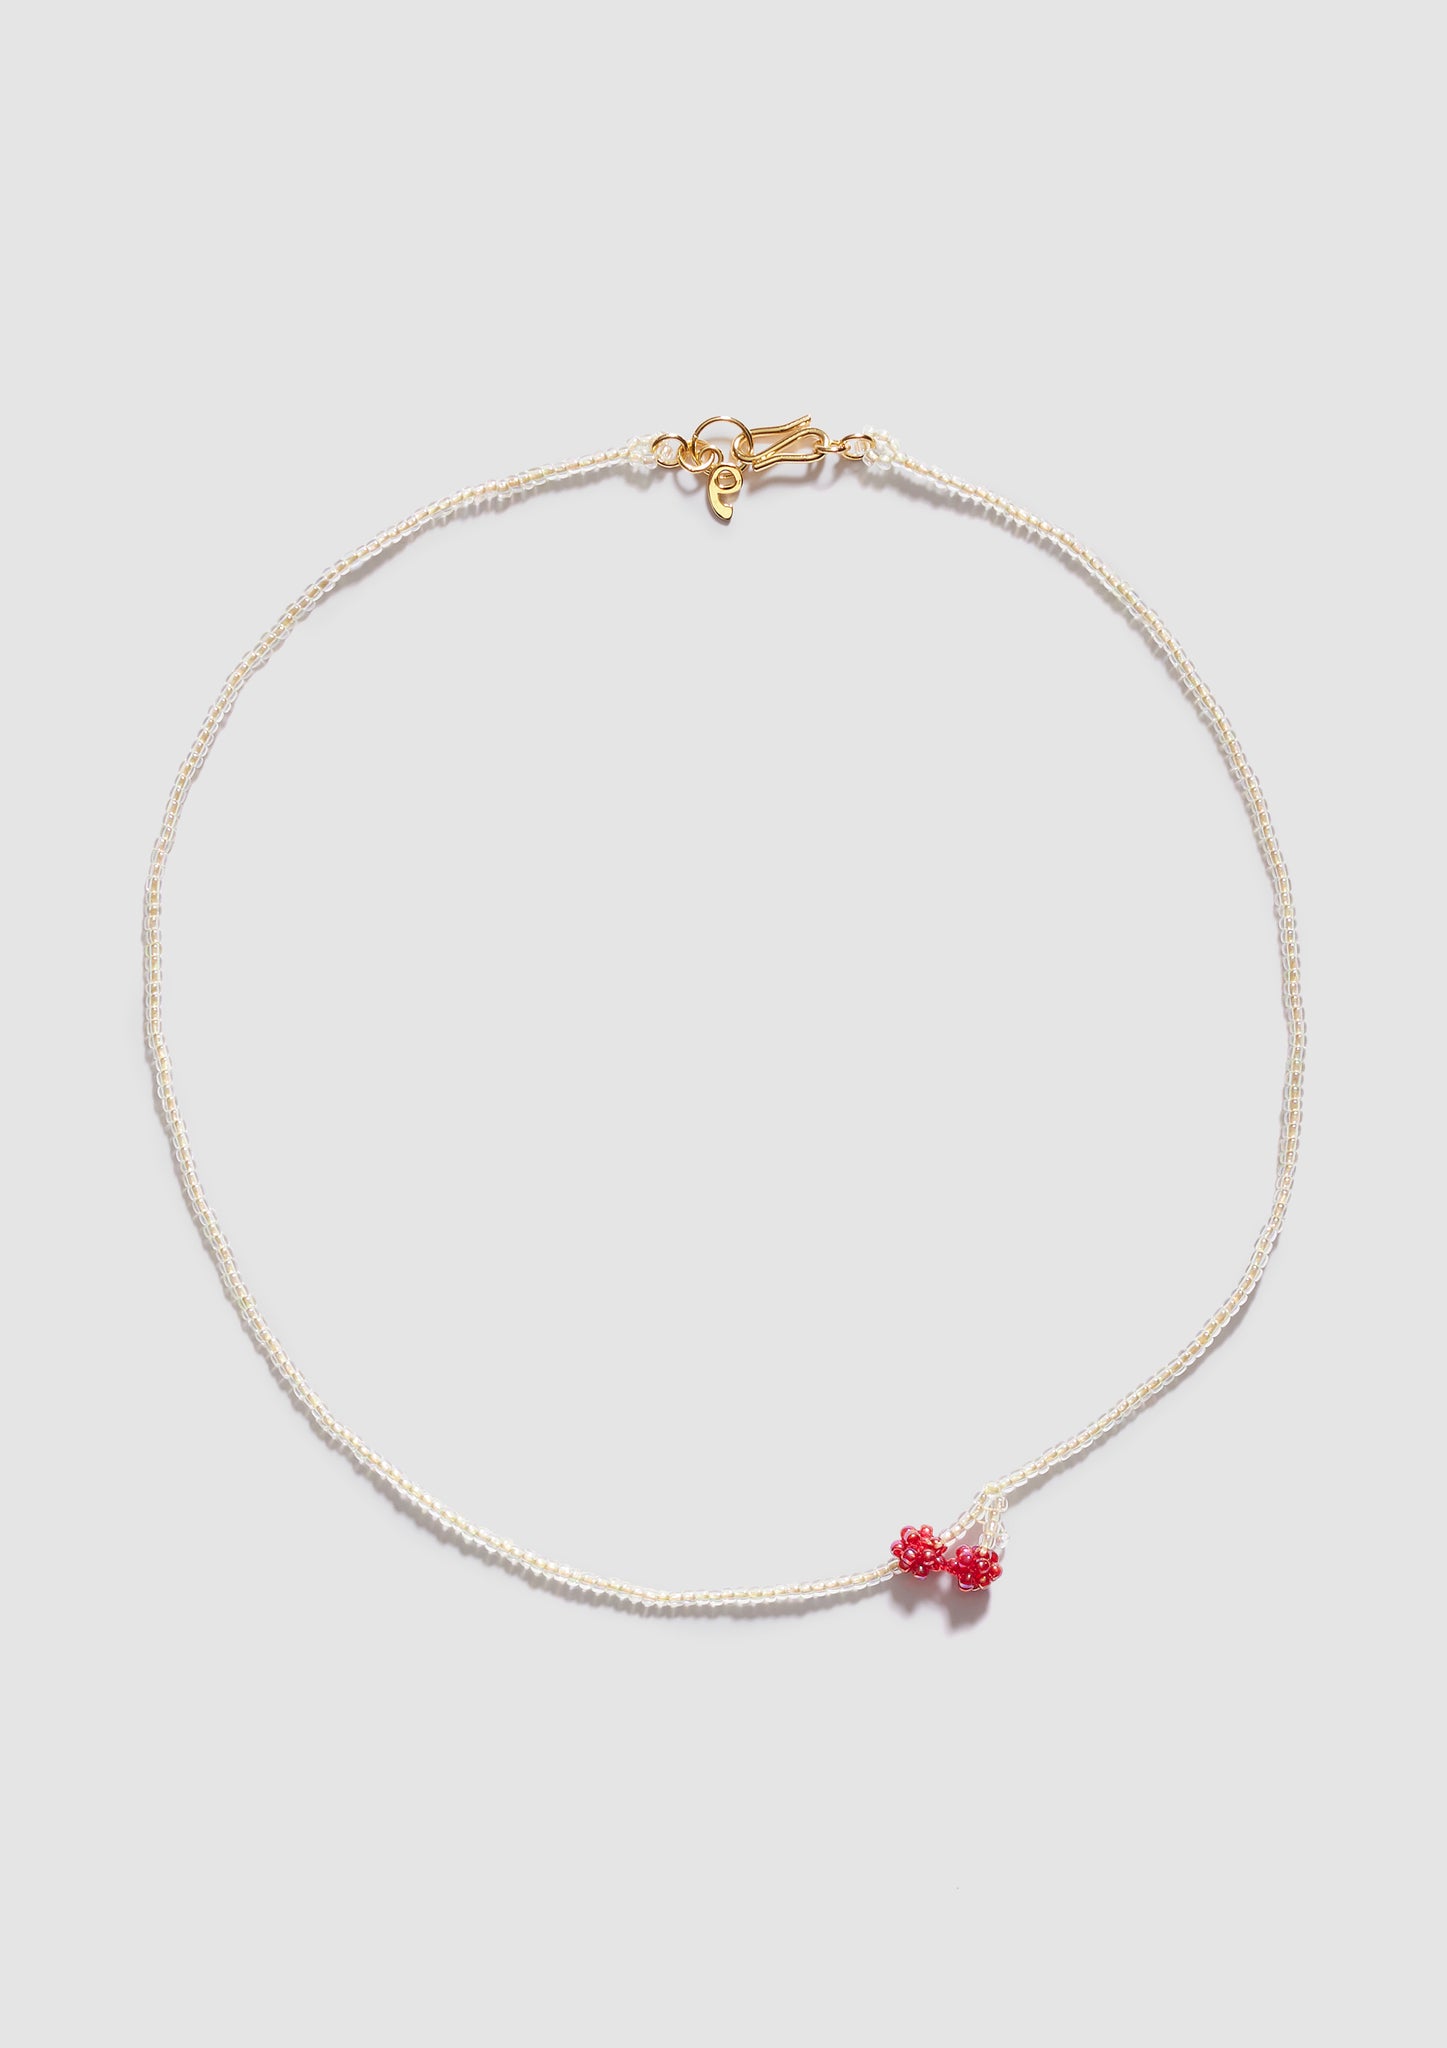 Mini Cherry Necklace